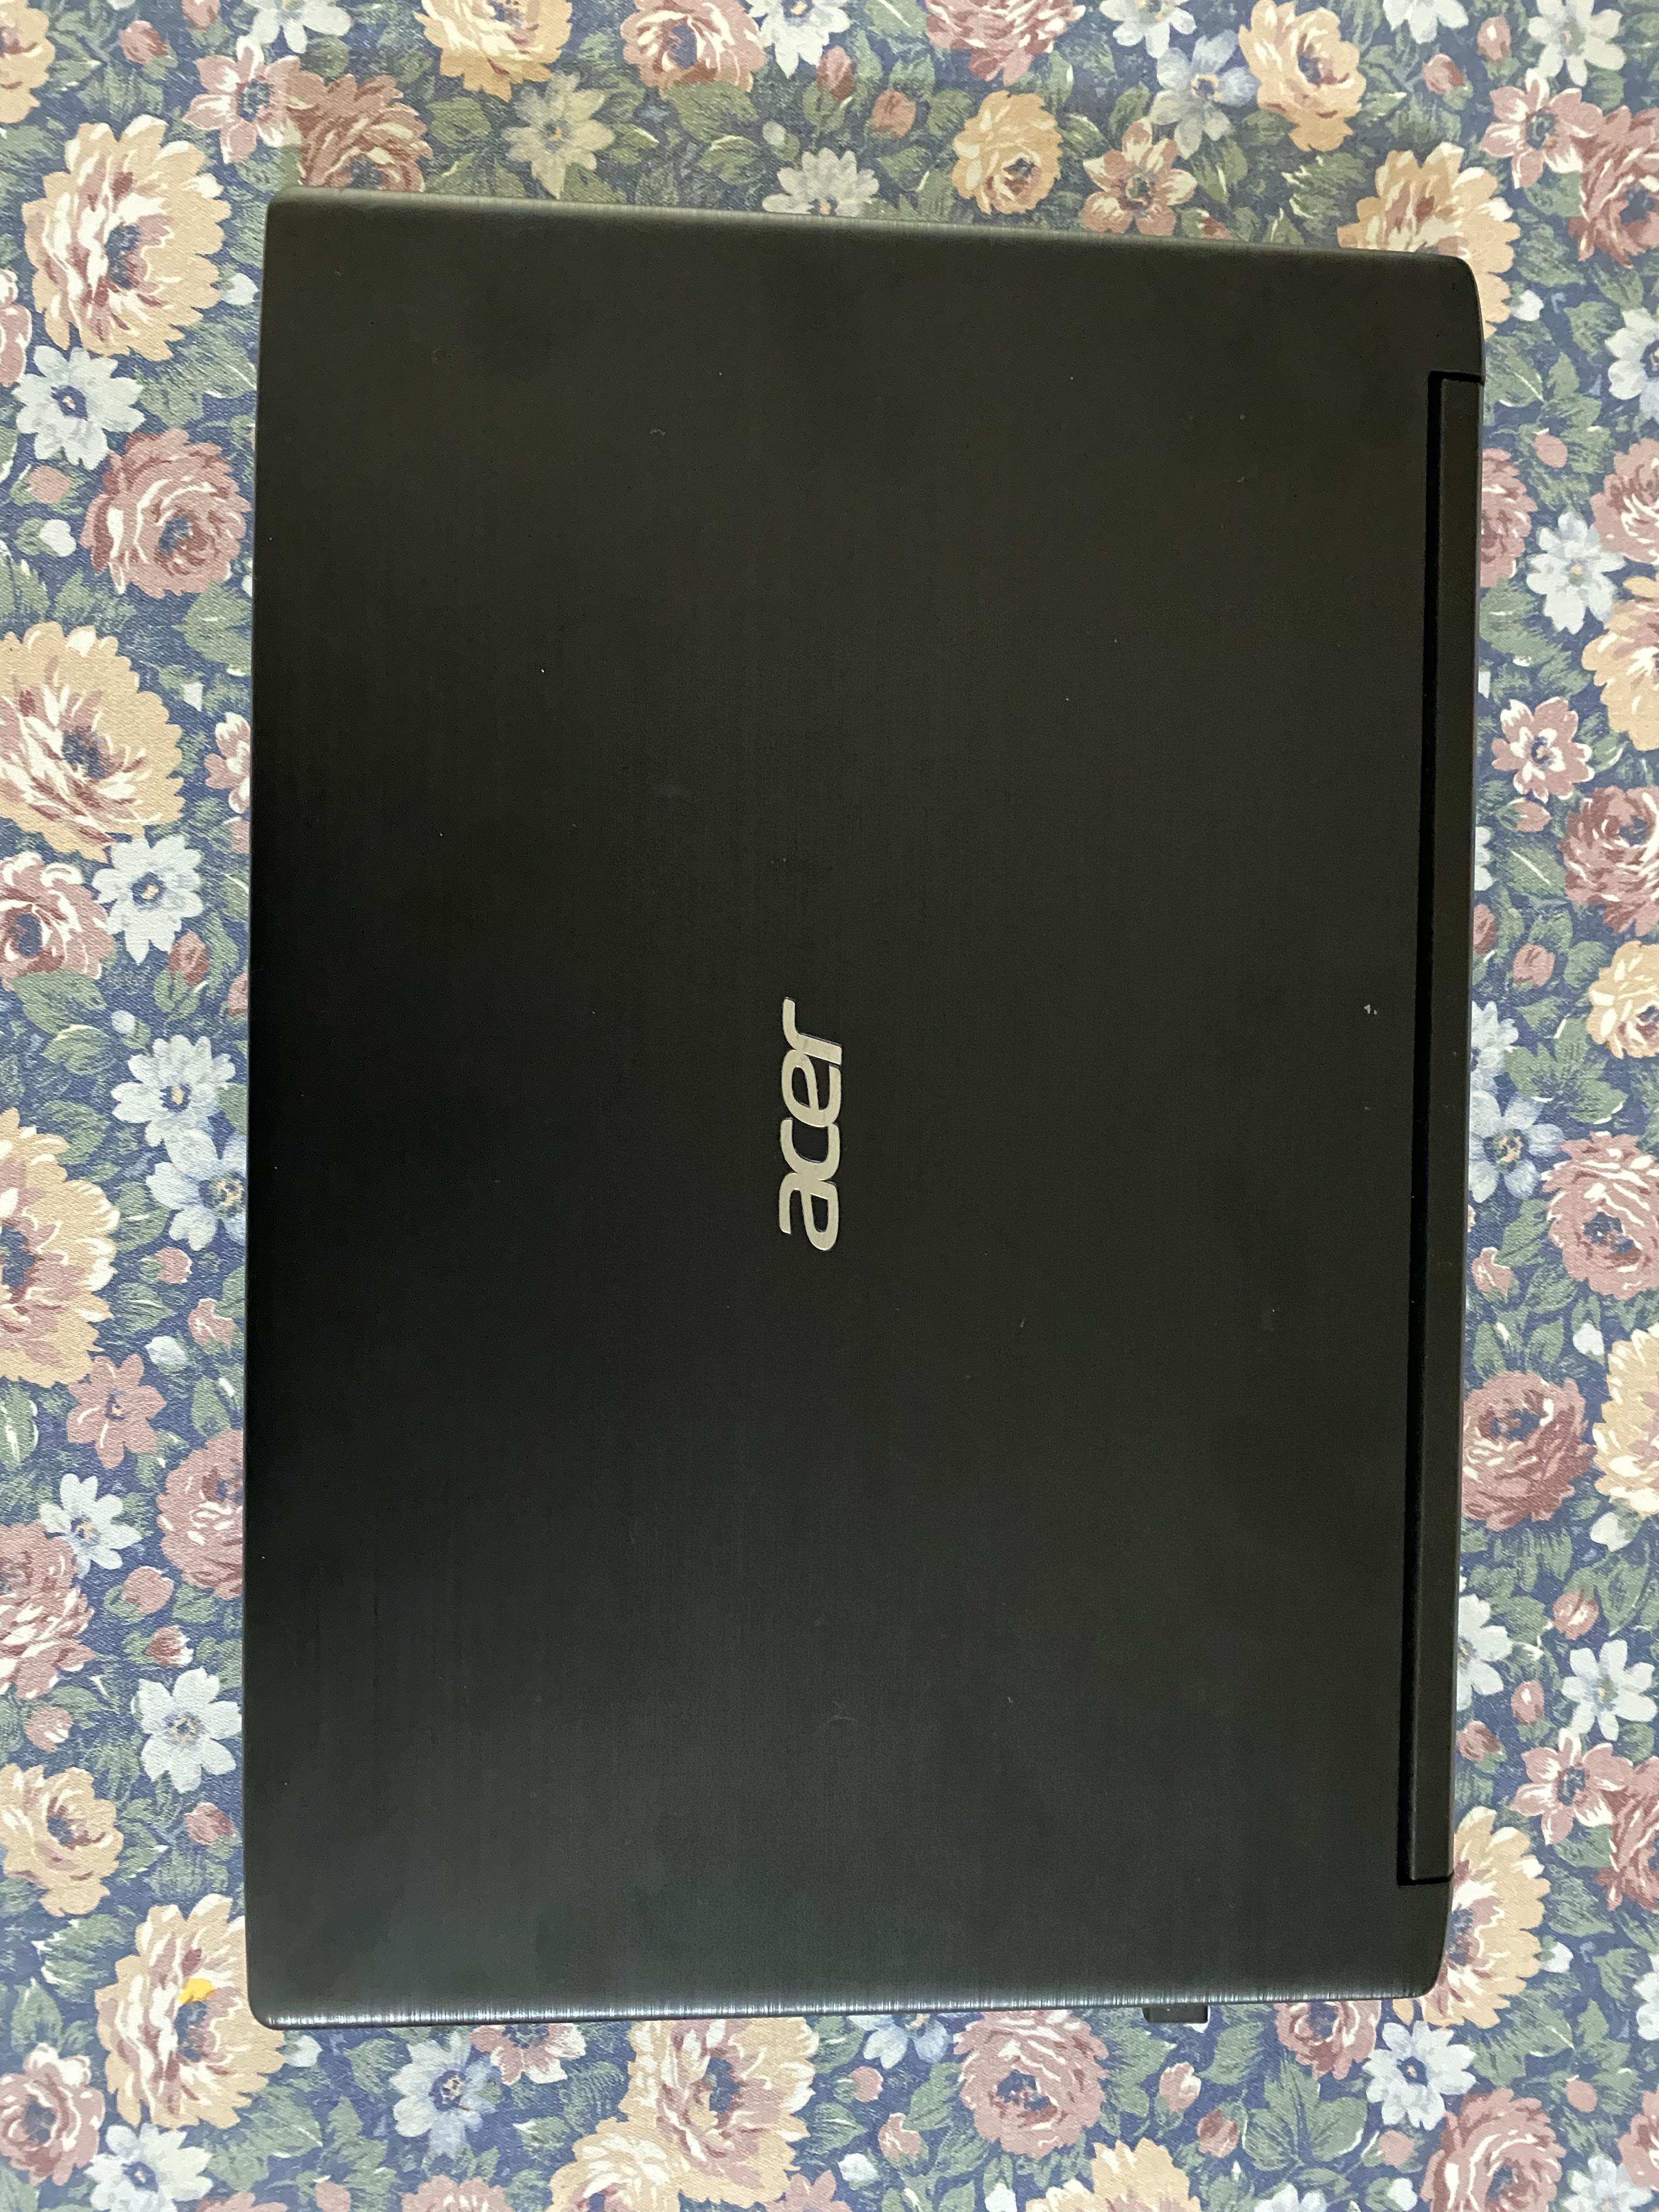 Acer 8gb ram 2gb e.kartı fhd 5.000 tl | DonanımHaber Forum